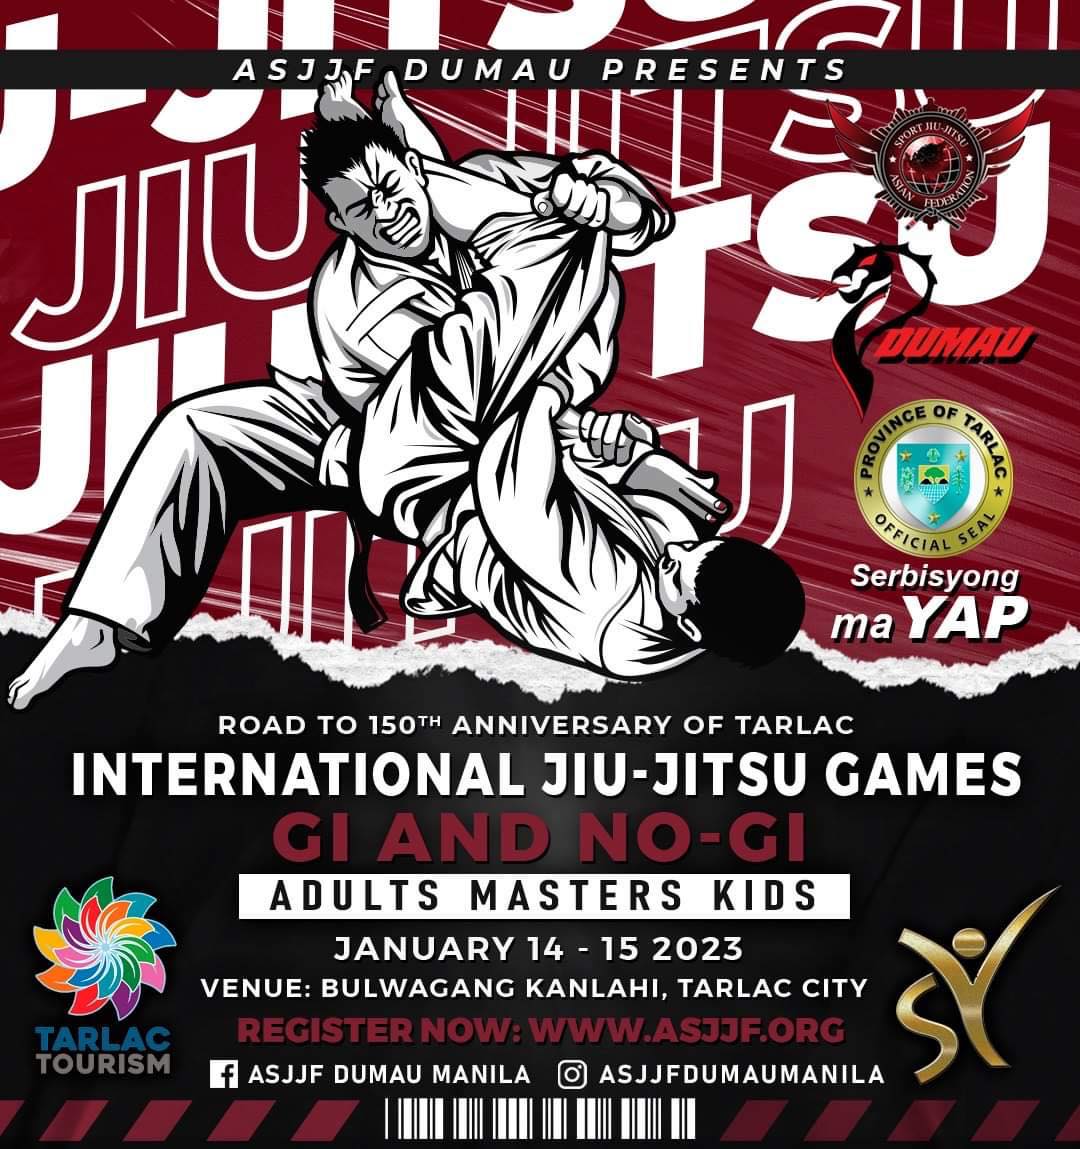 road to 150th anniversary of tarlac international jiu jitsu games